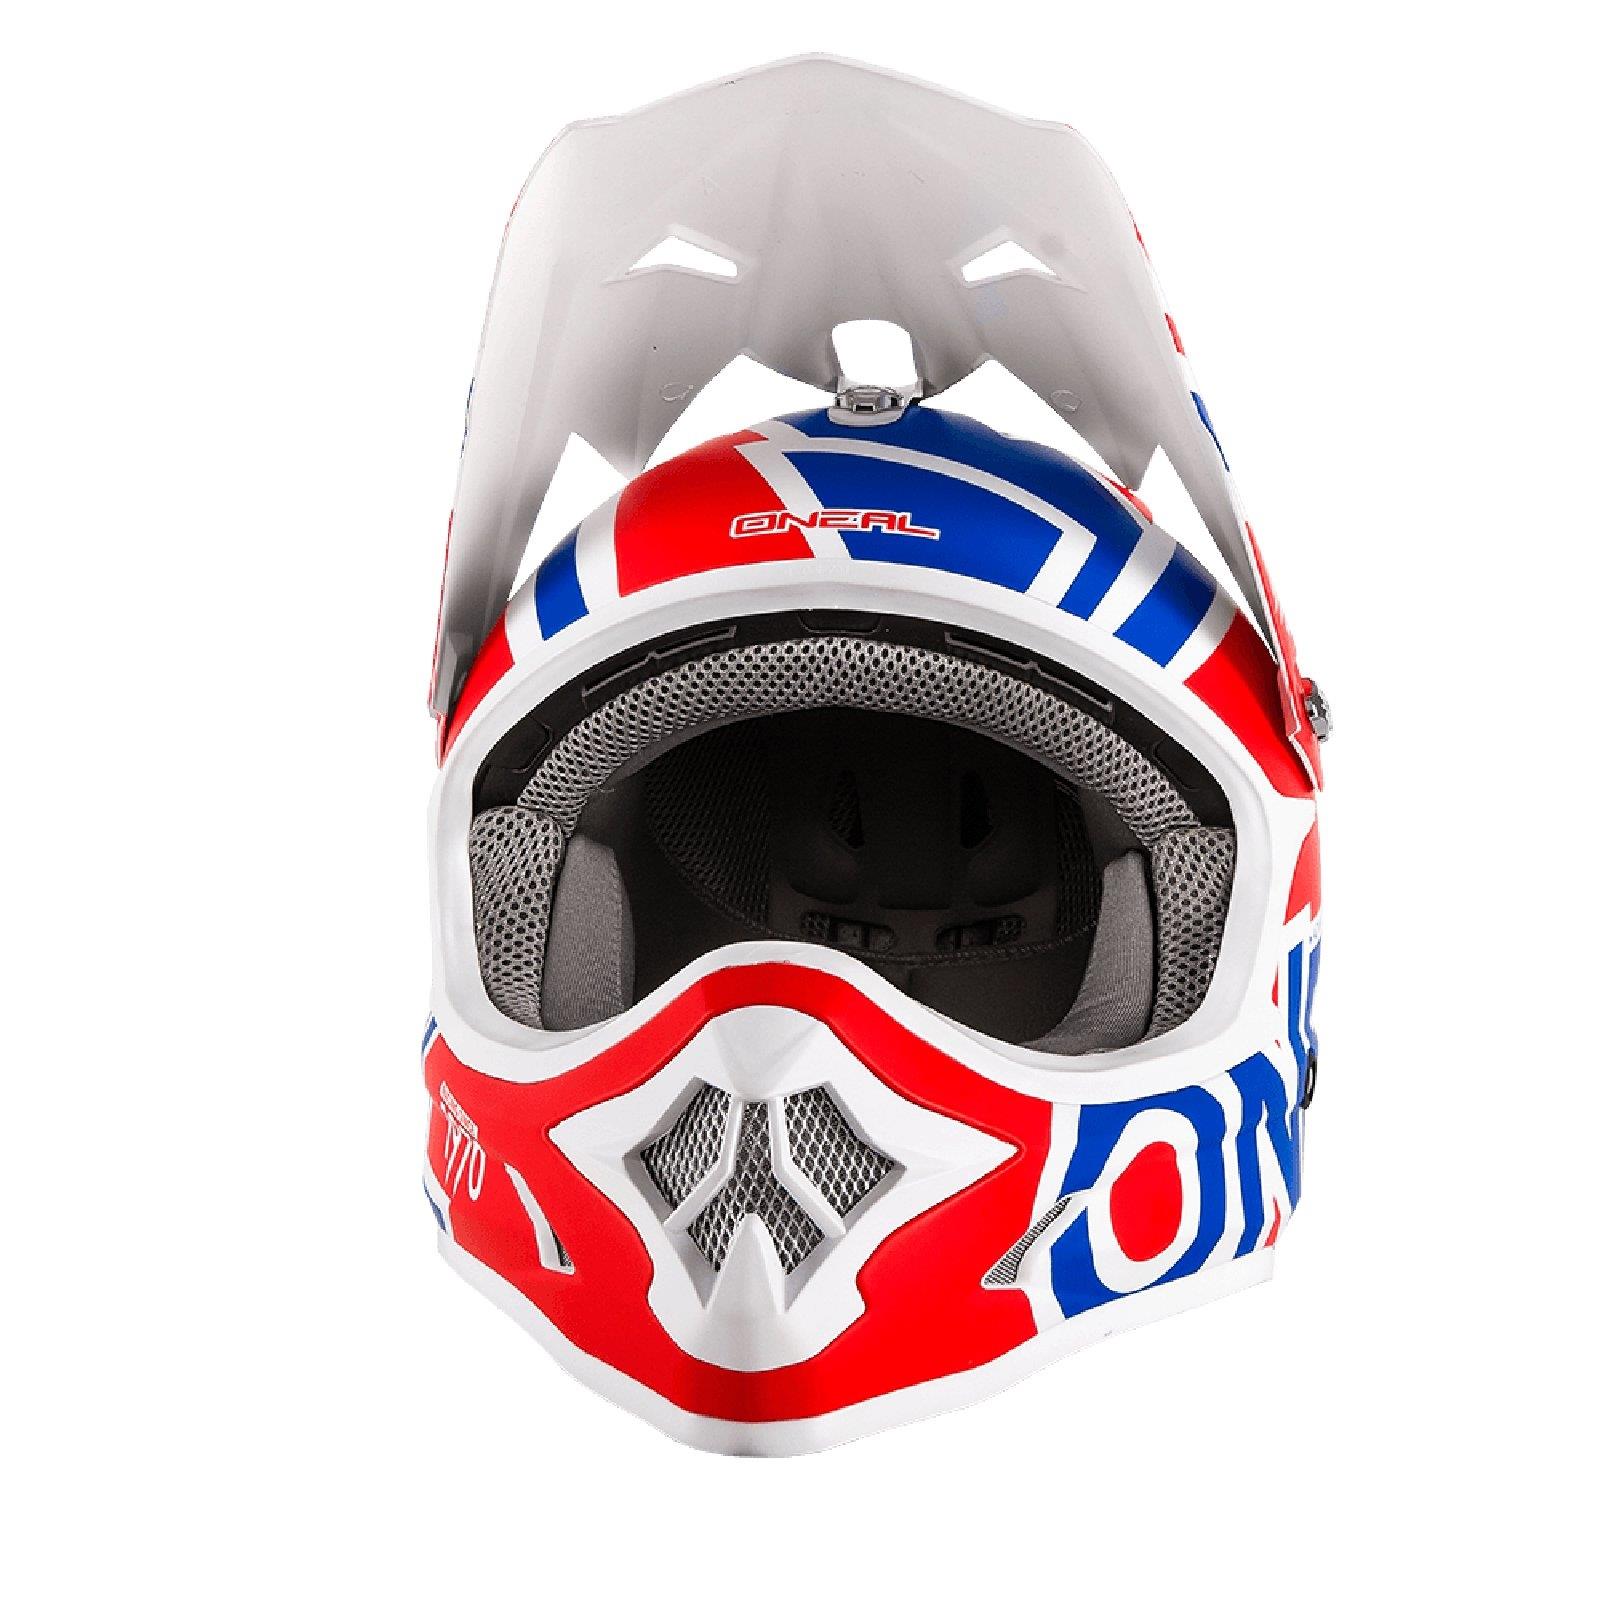 O'Neal 3SRS Radium MX Helmet Moto Cross Enduro Quad Offroad Motorcycle